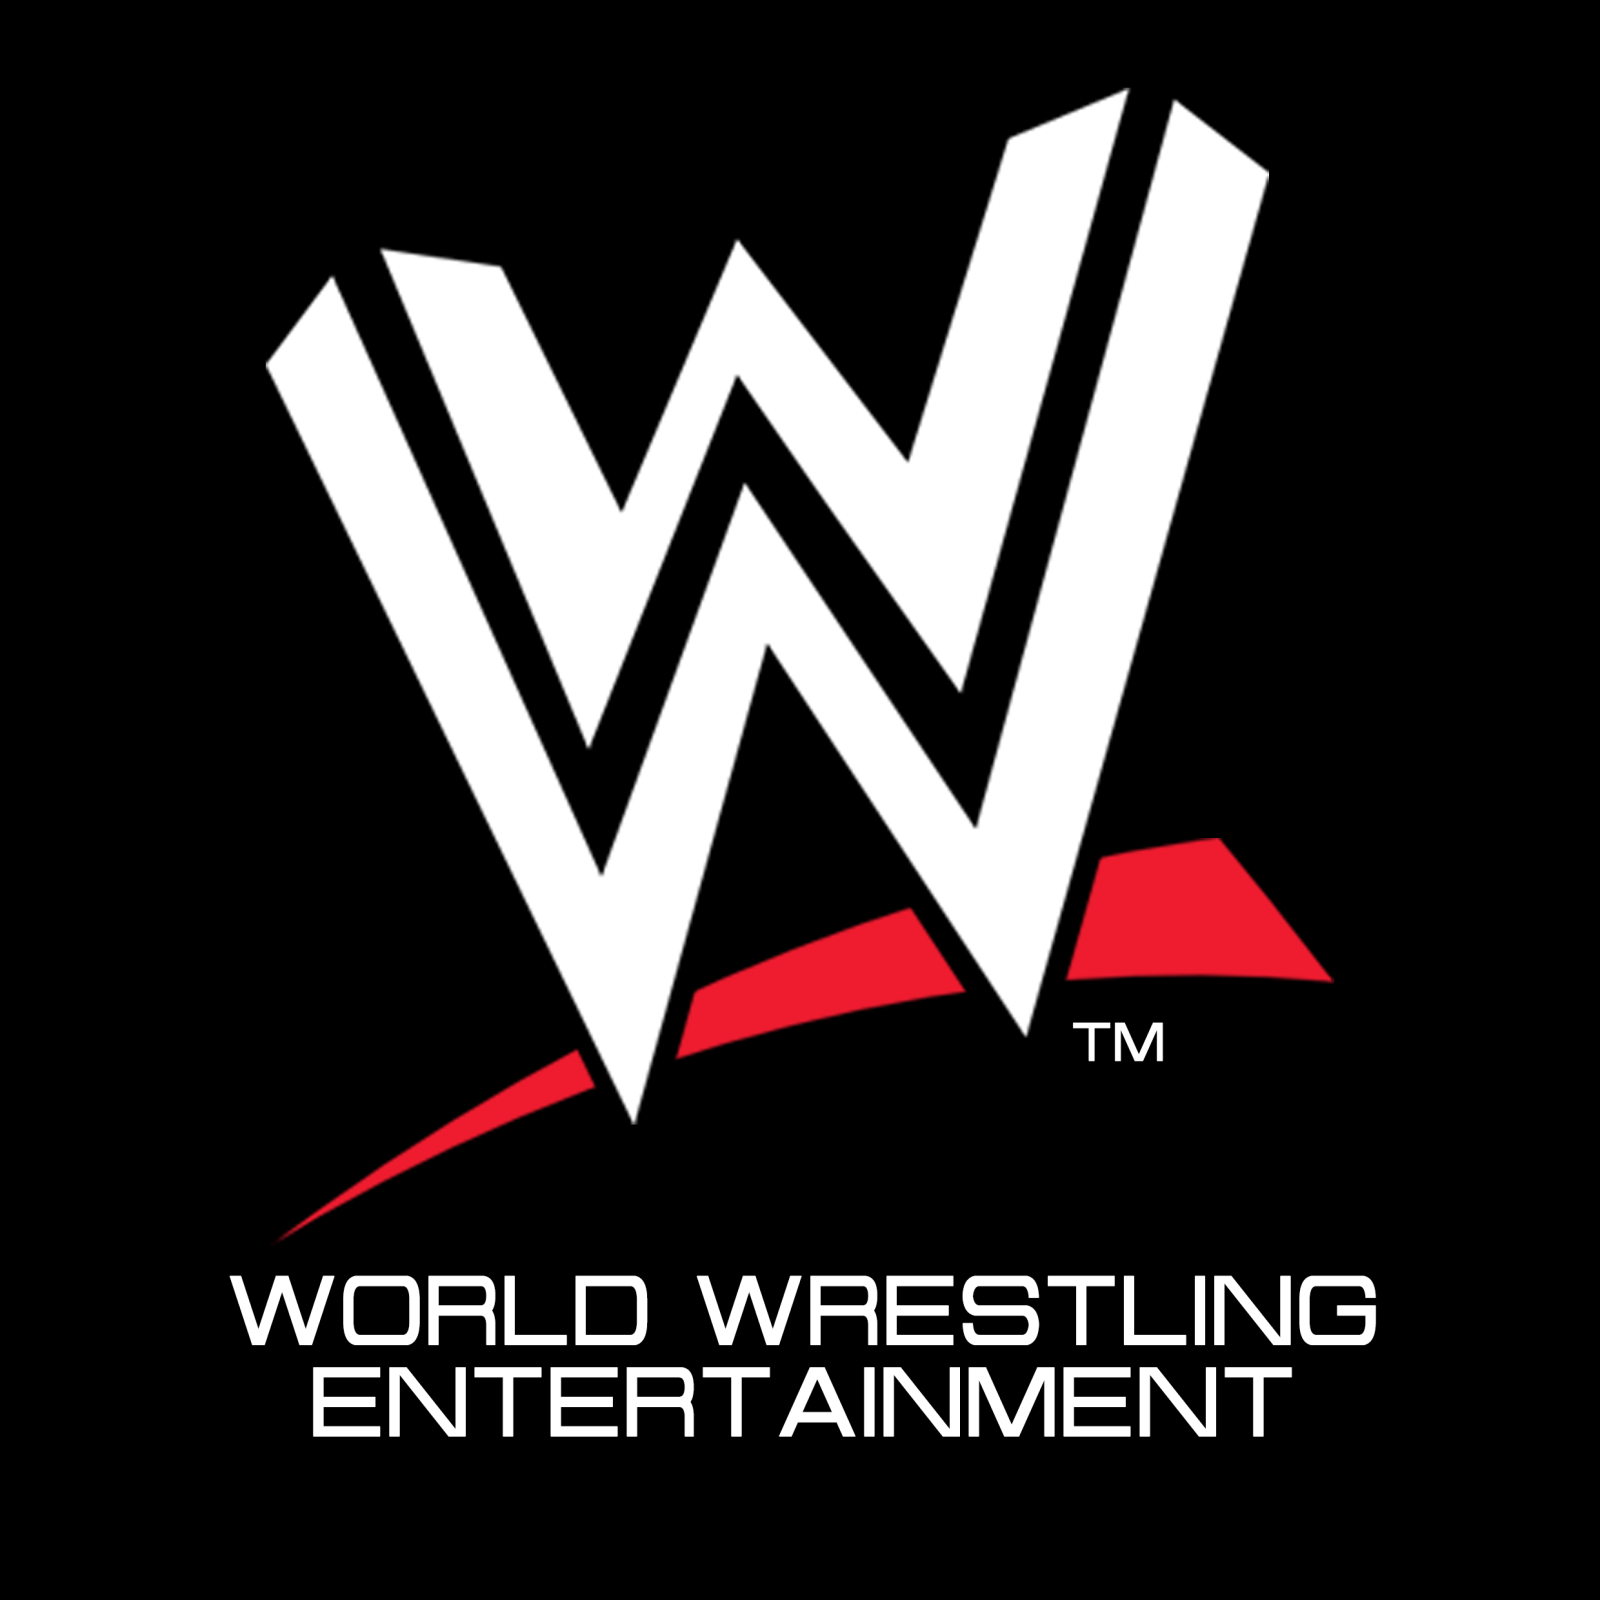 All WWE Logo - Wwe Logos